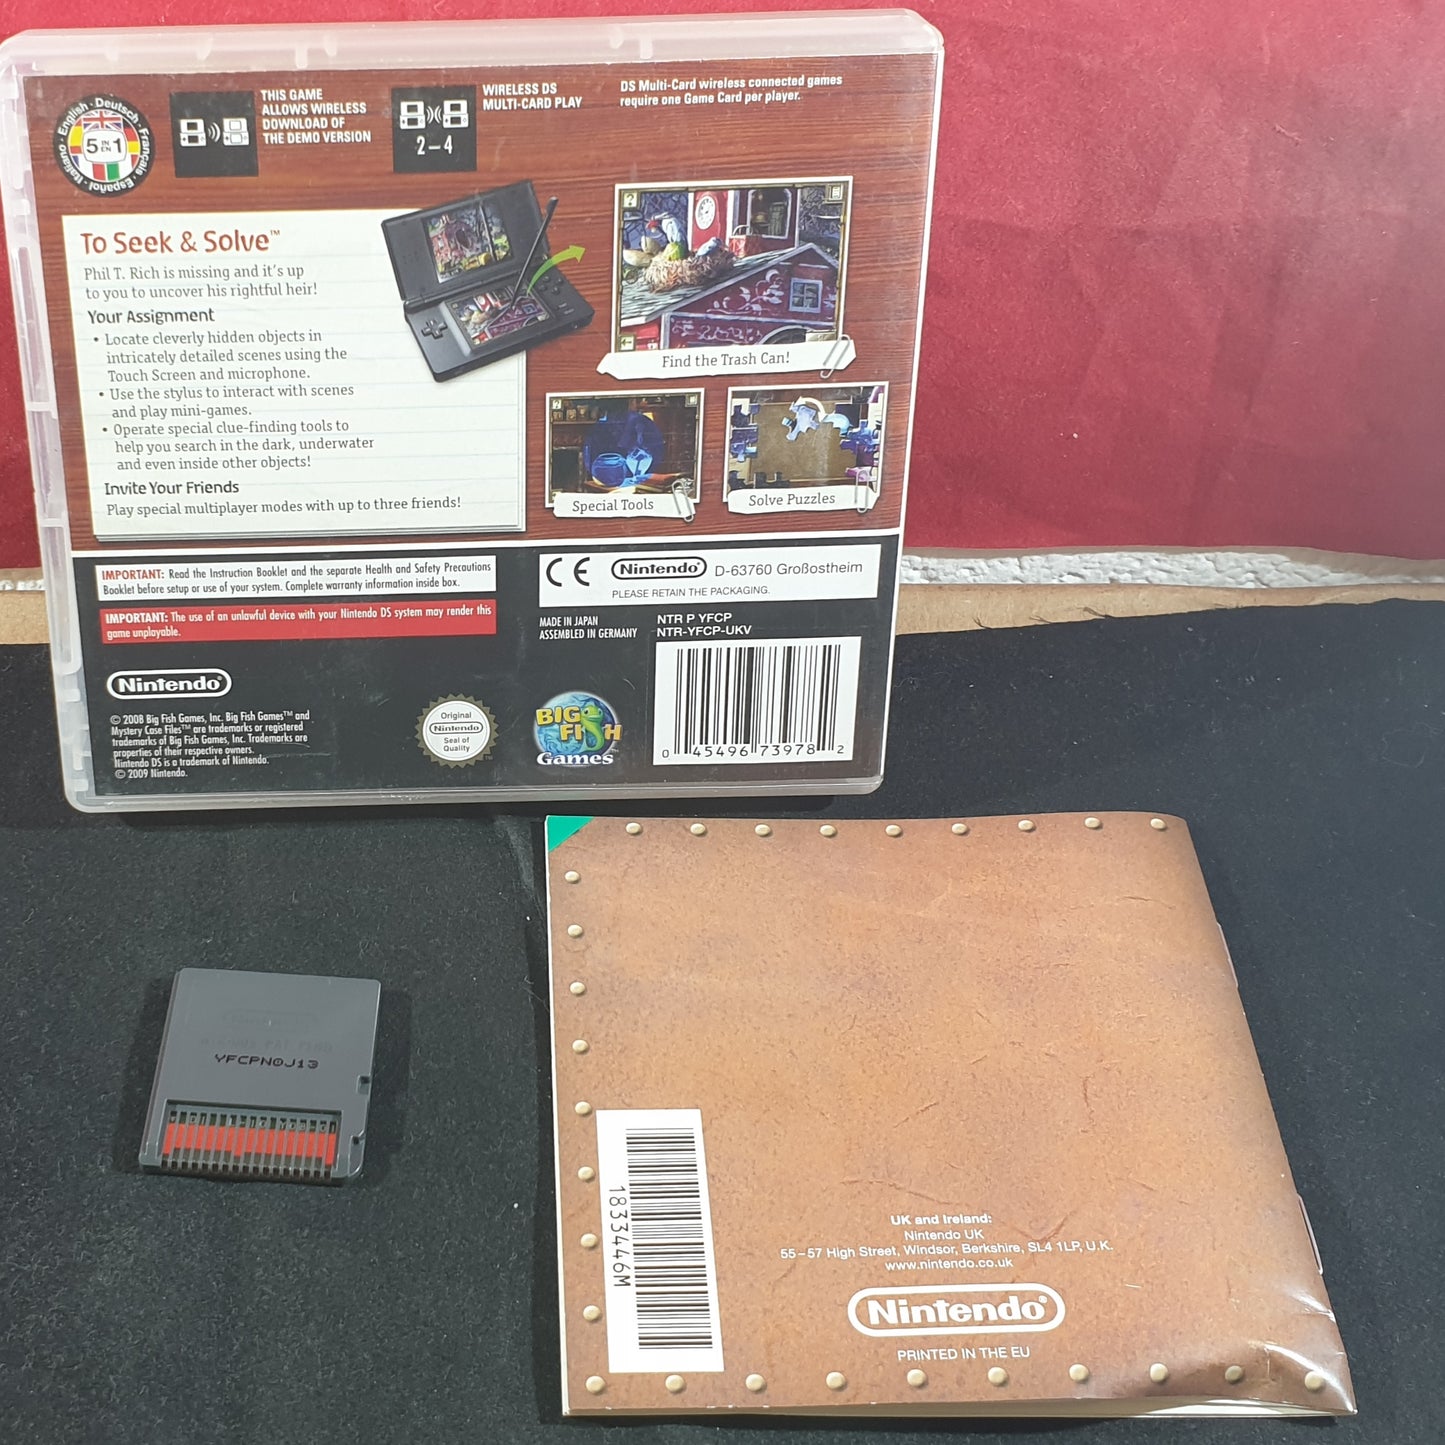 Mystery Case Files MillionHeir Nintendo DS Game